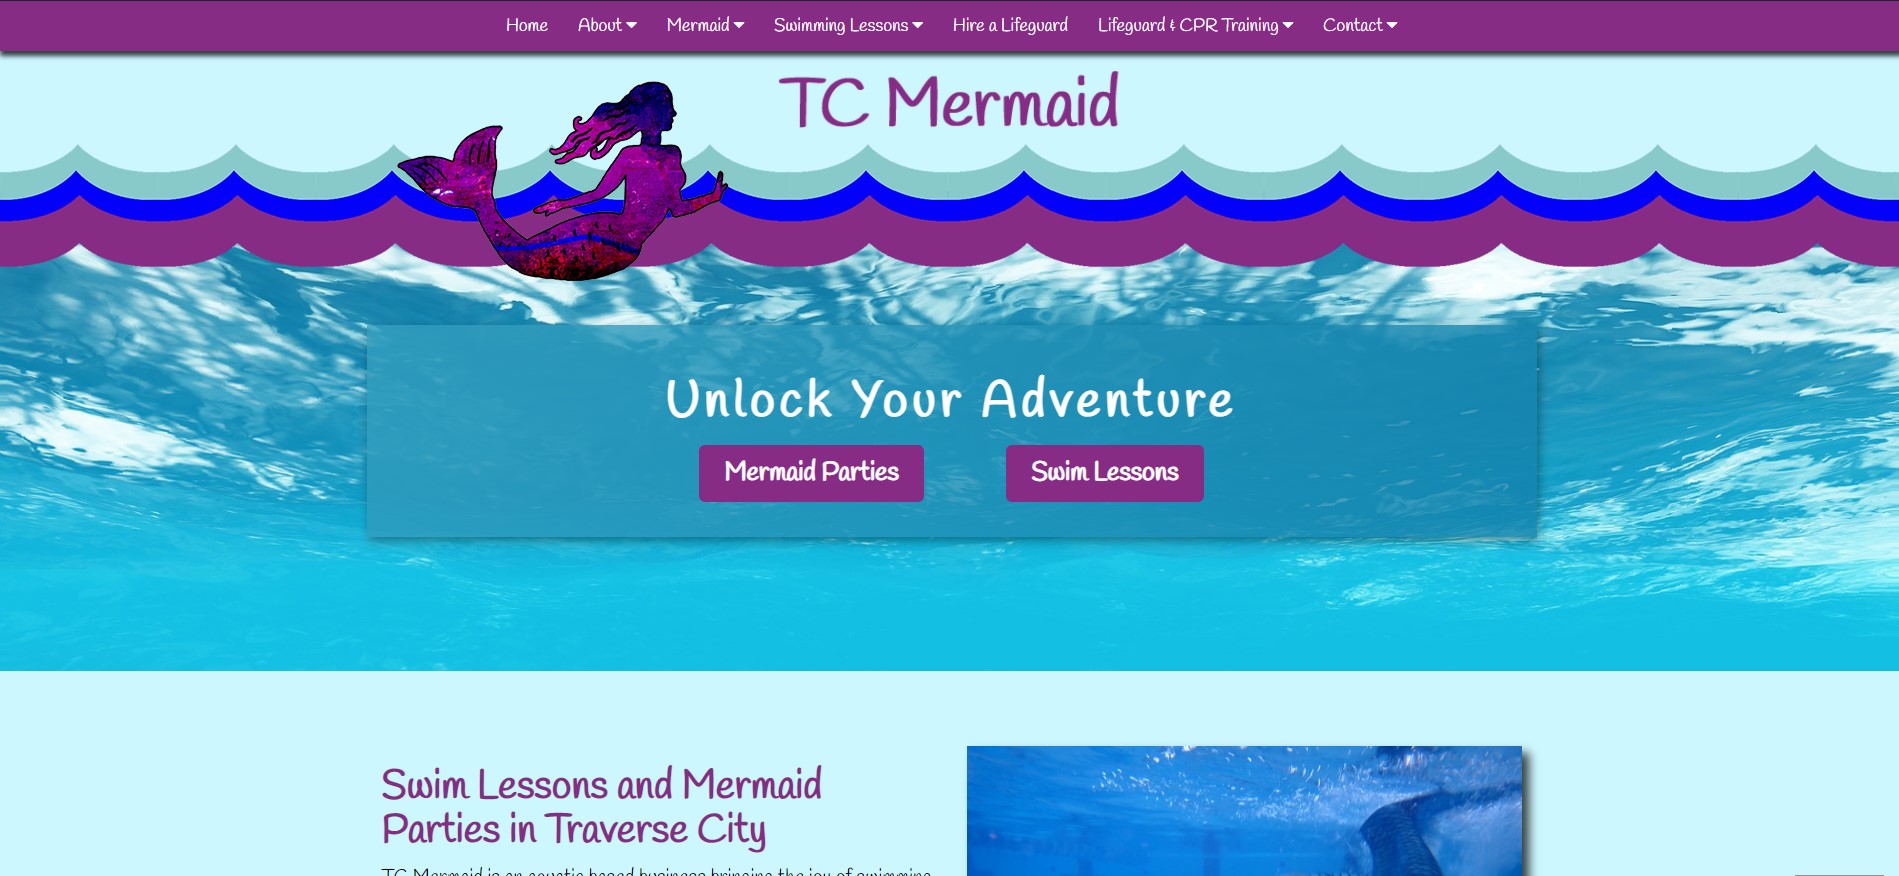 TC Mermaid website designed by Pro Web marketing